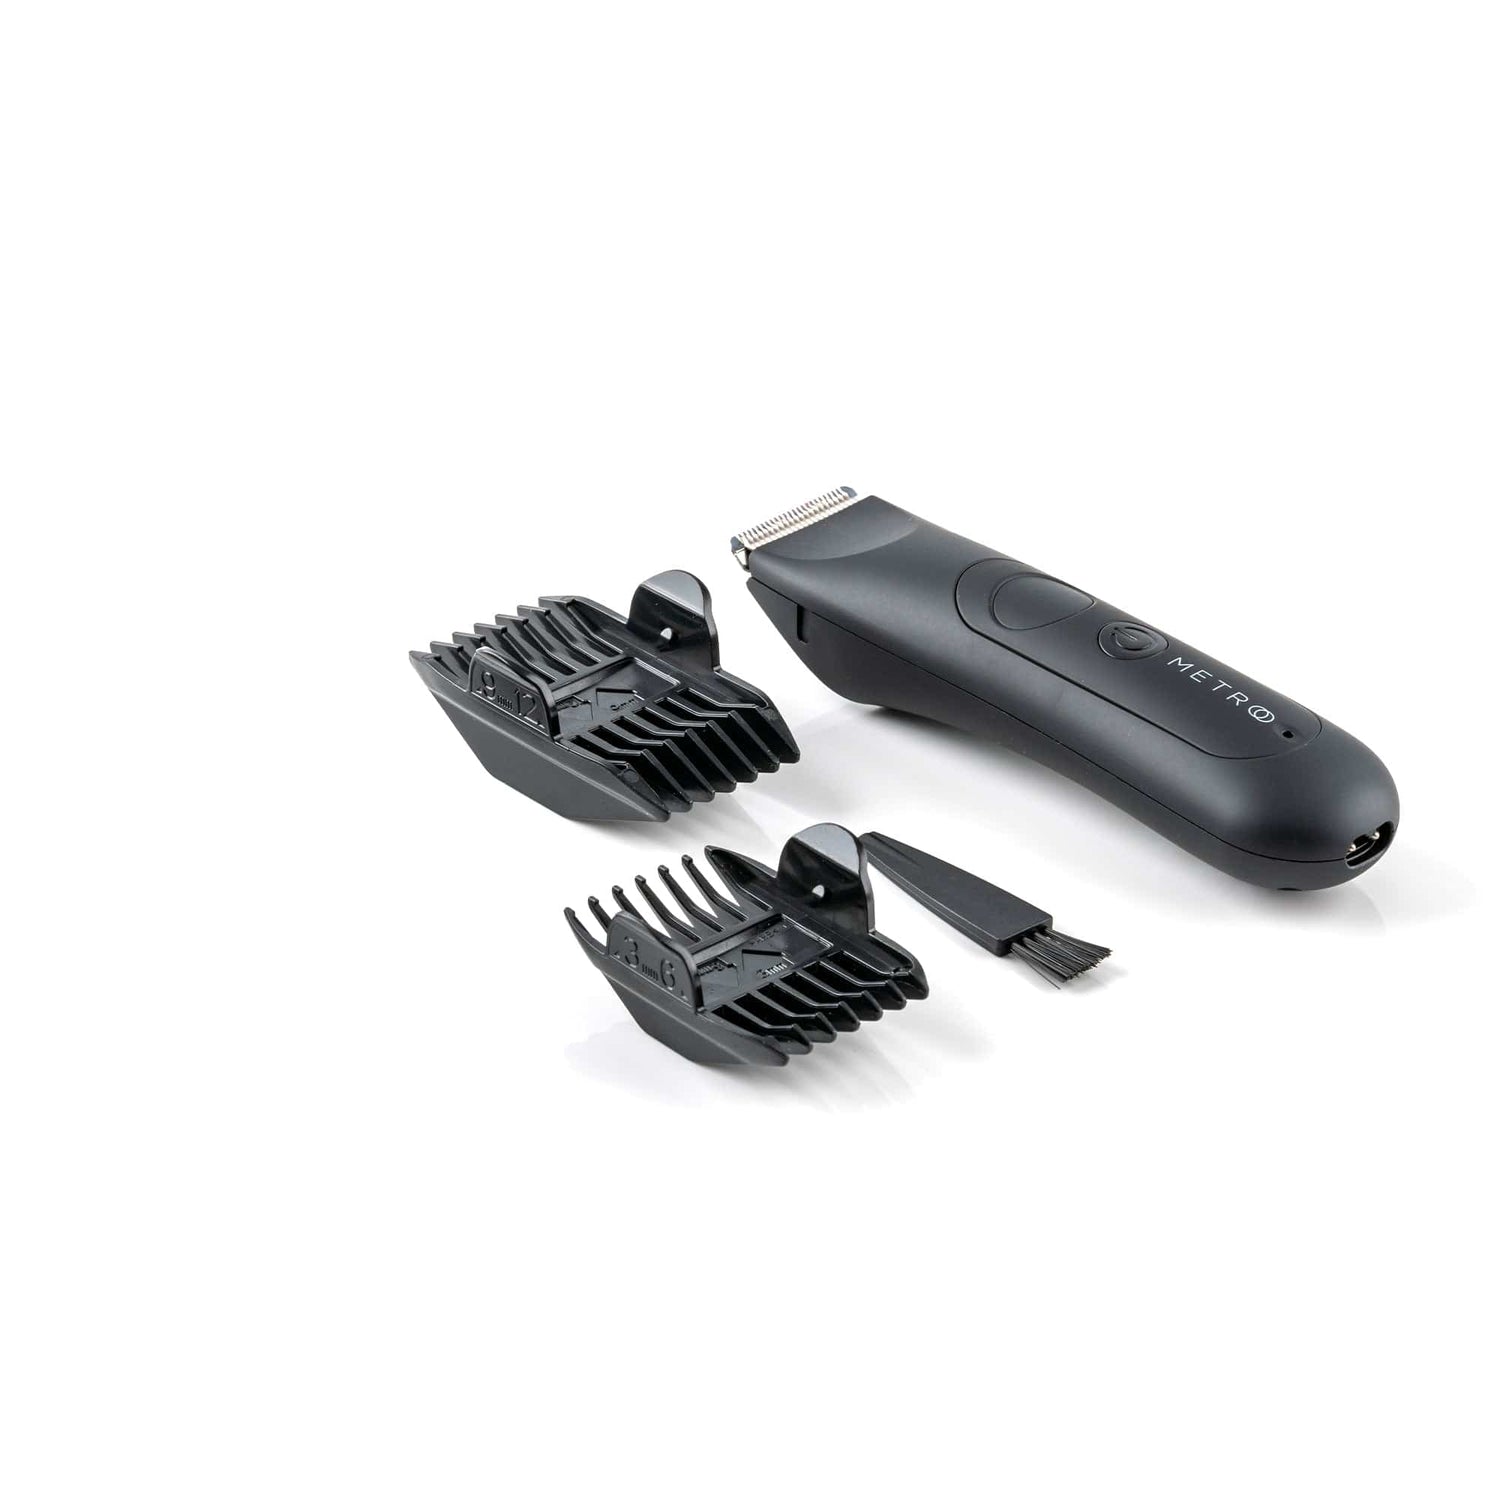 MetroMan Rechargeable USB Waterproof Body Hair Trimmer